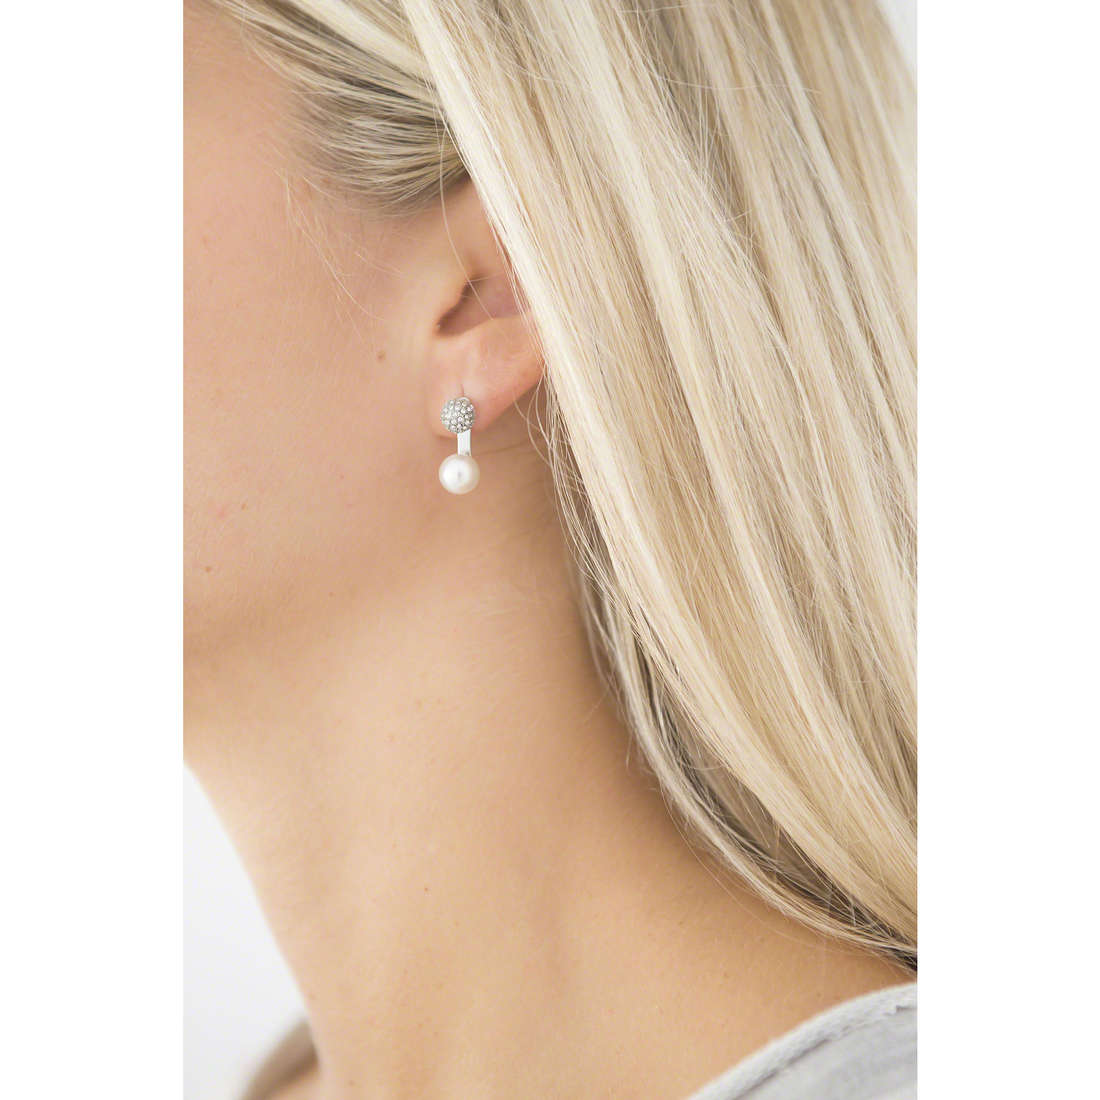 Emporio Armani earrings woman EGS2233040 wearing